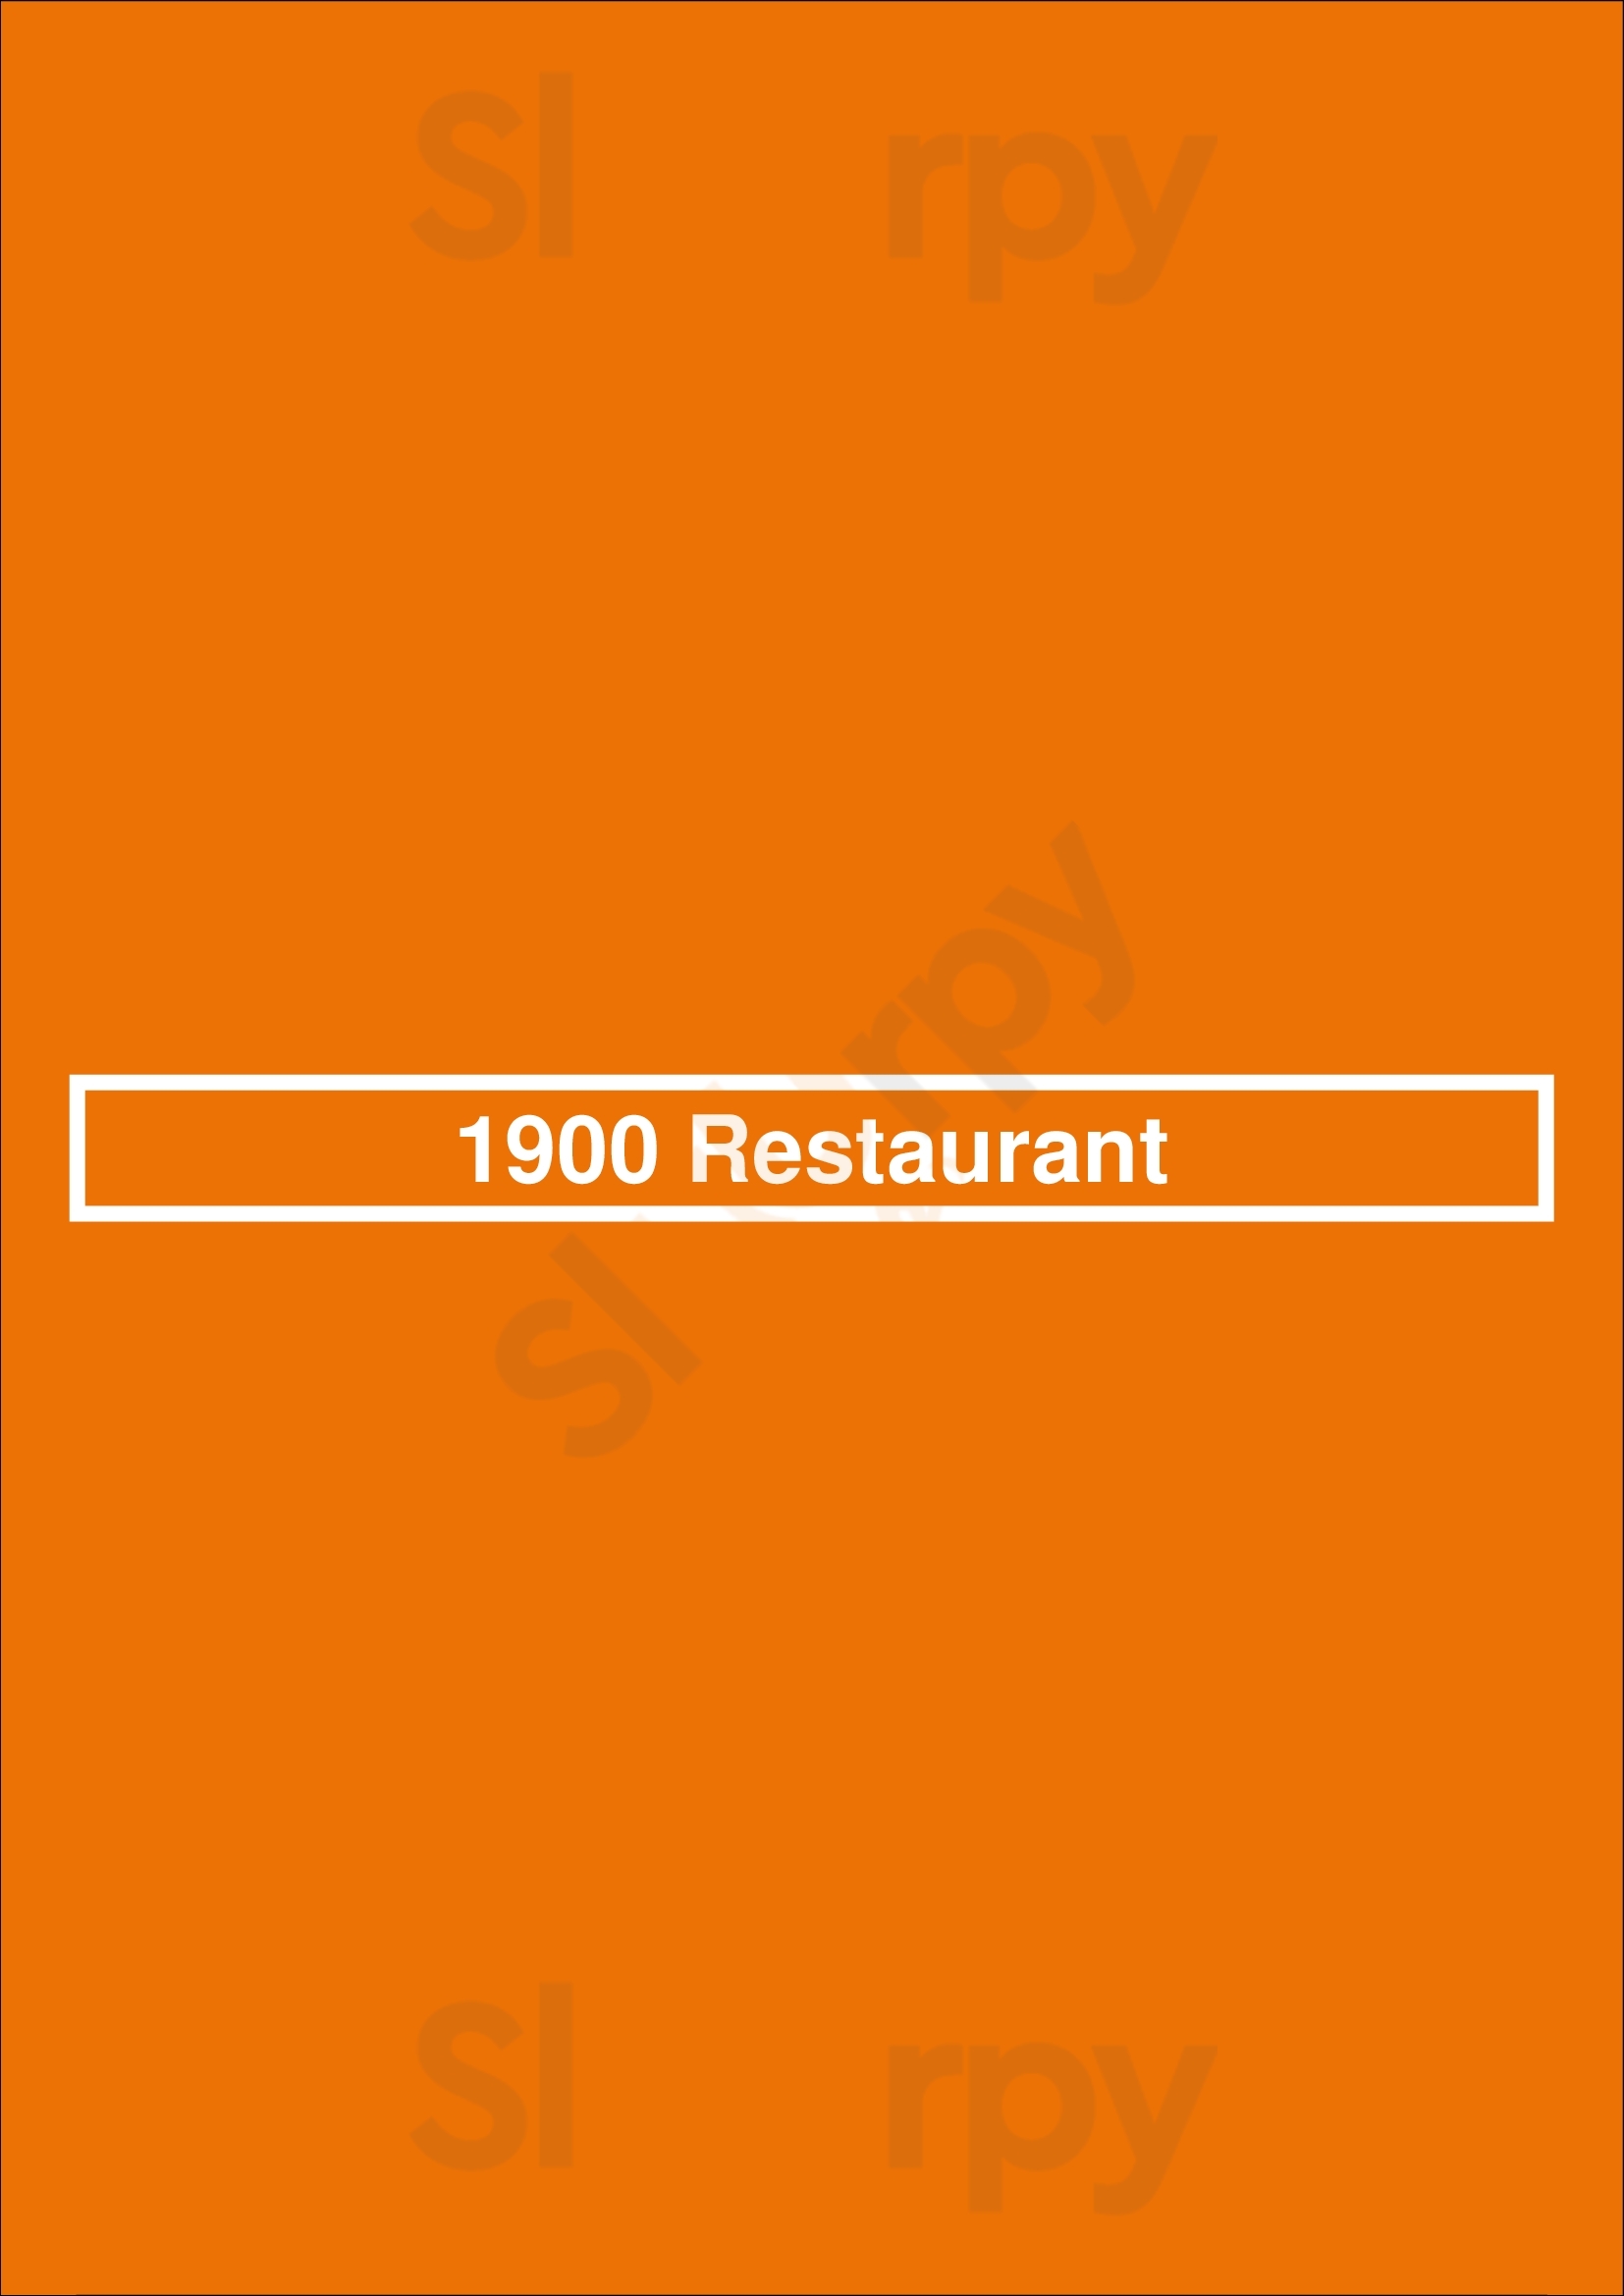 1900 Restaurant Dublin Menu - 1